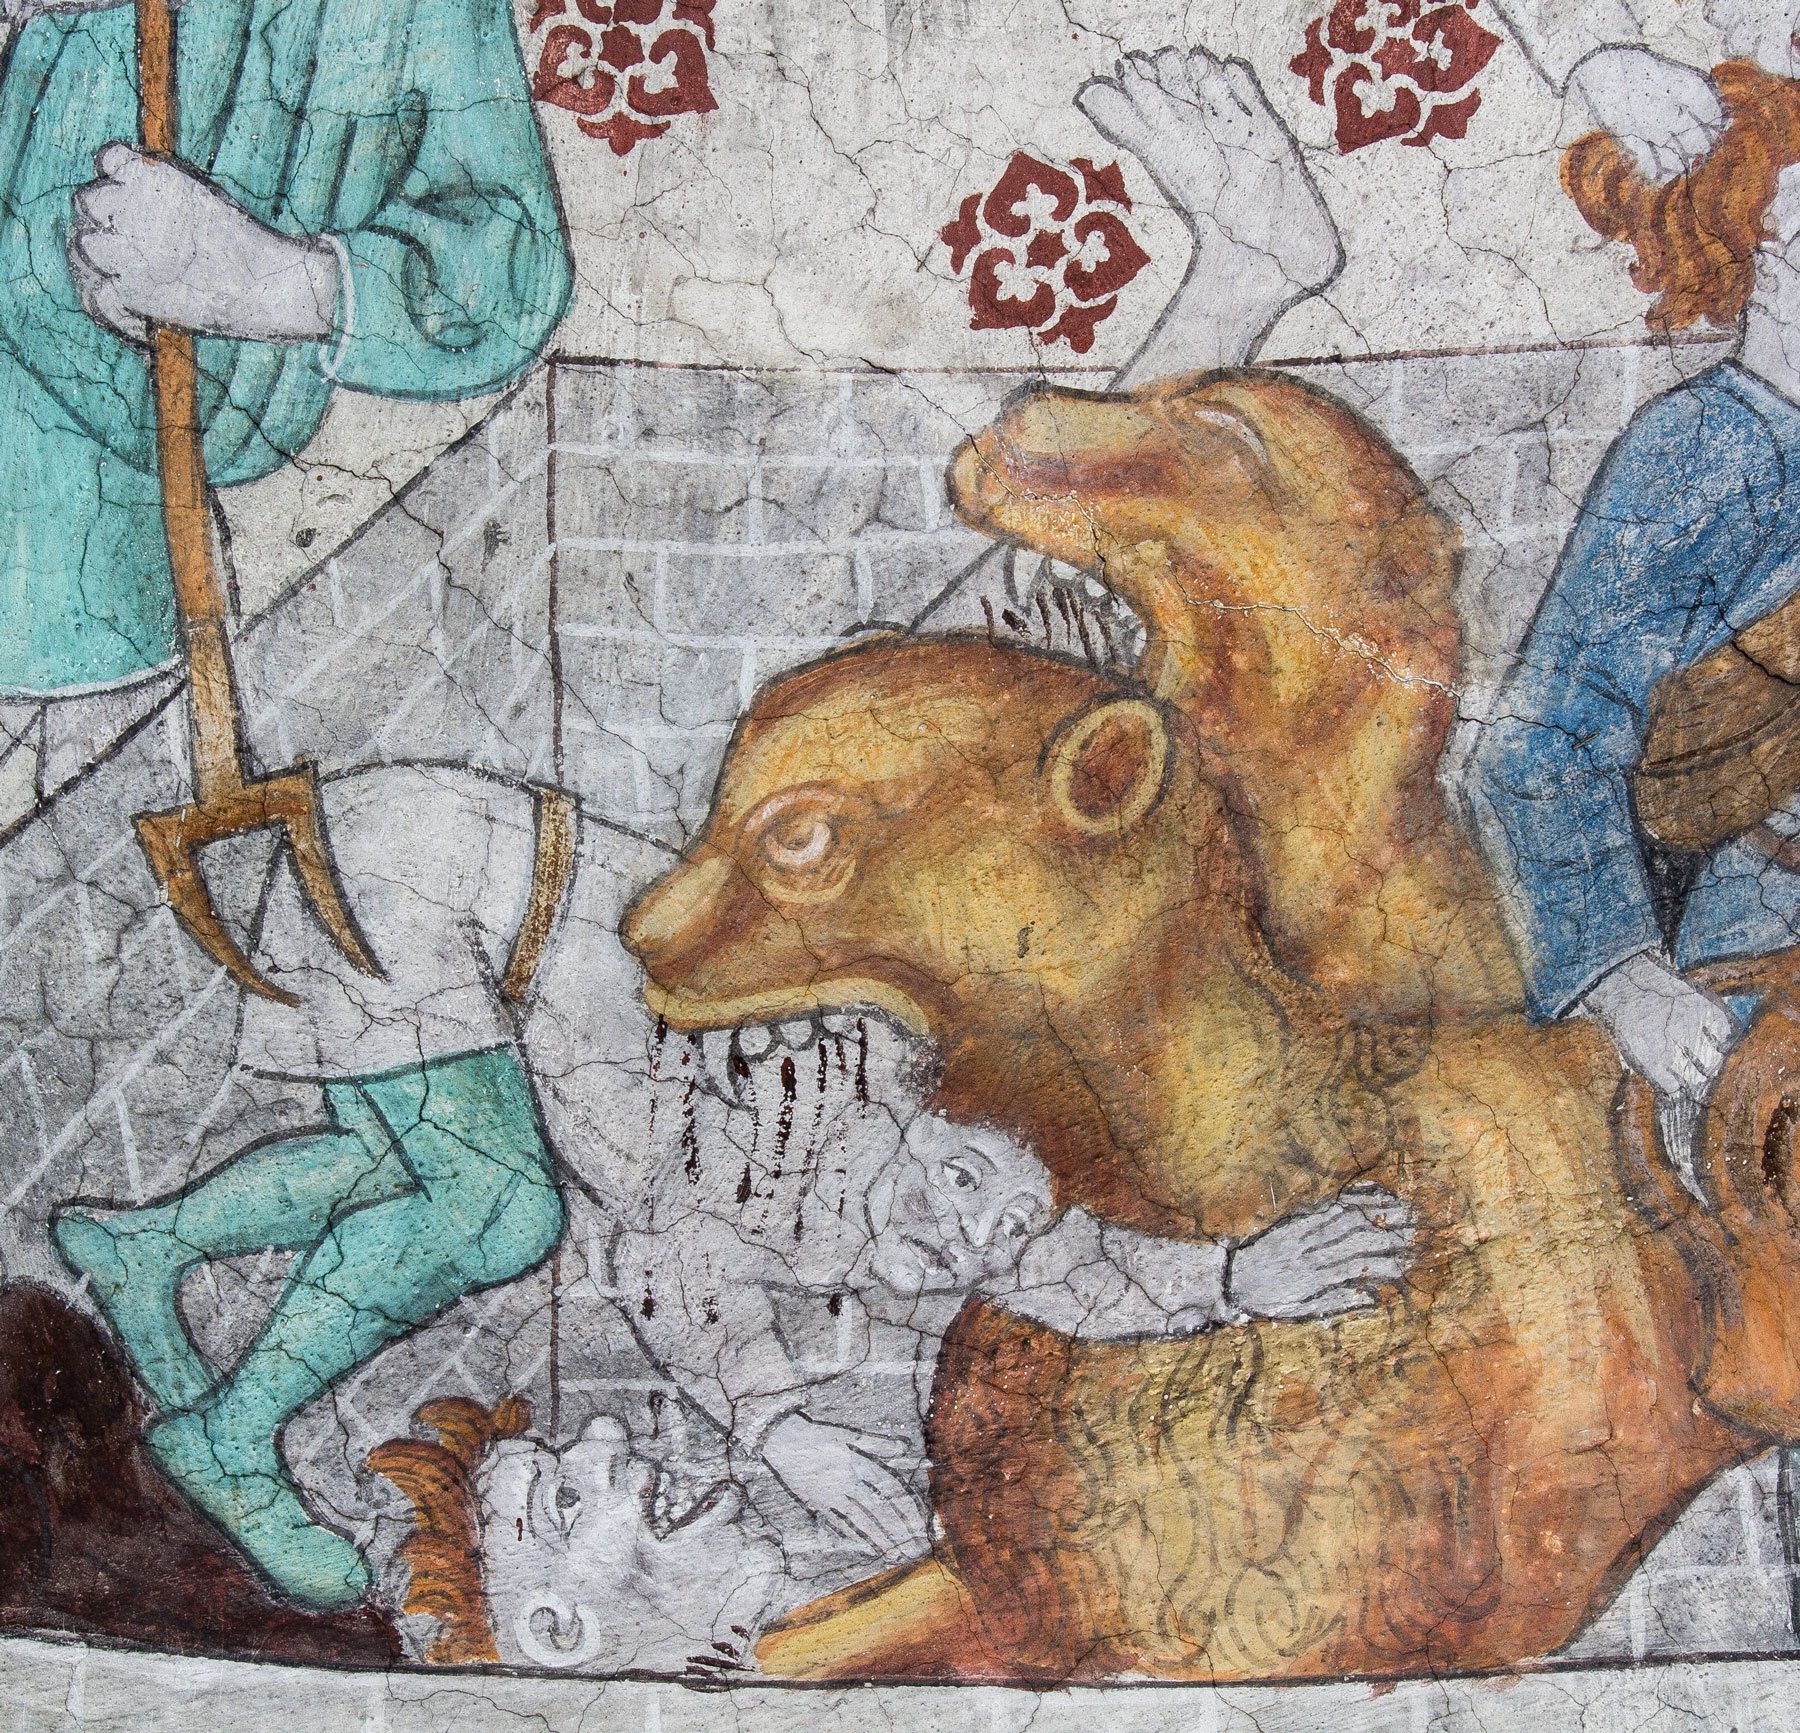 Detalj ur Daniel i lejongropen, där Daniels fiender kastas i lejongropen - Härkeberga kyrka